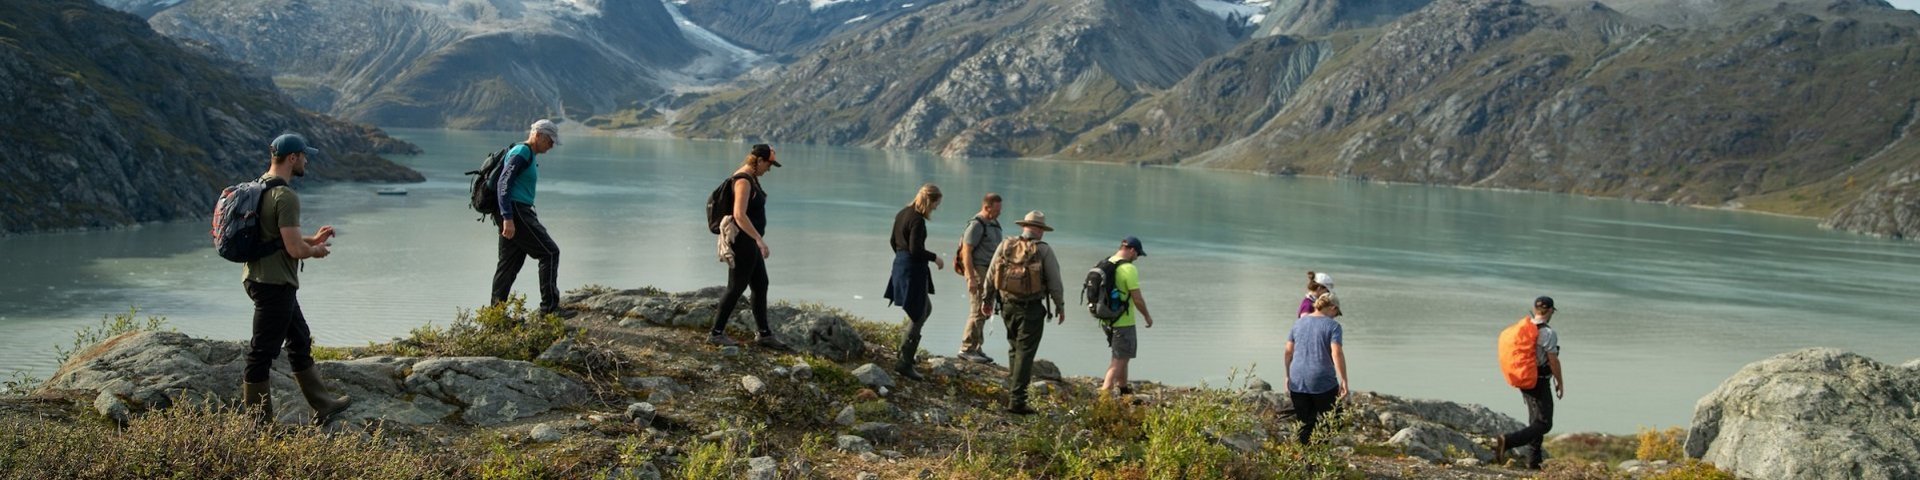 Wandern im Glacier Nationalpark in Alaska